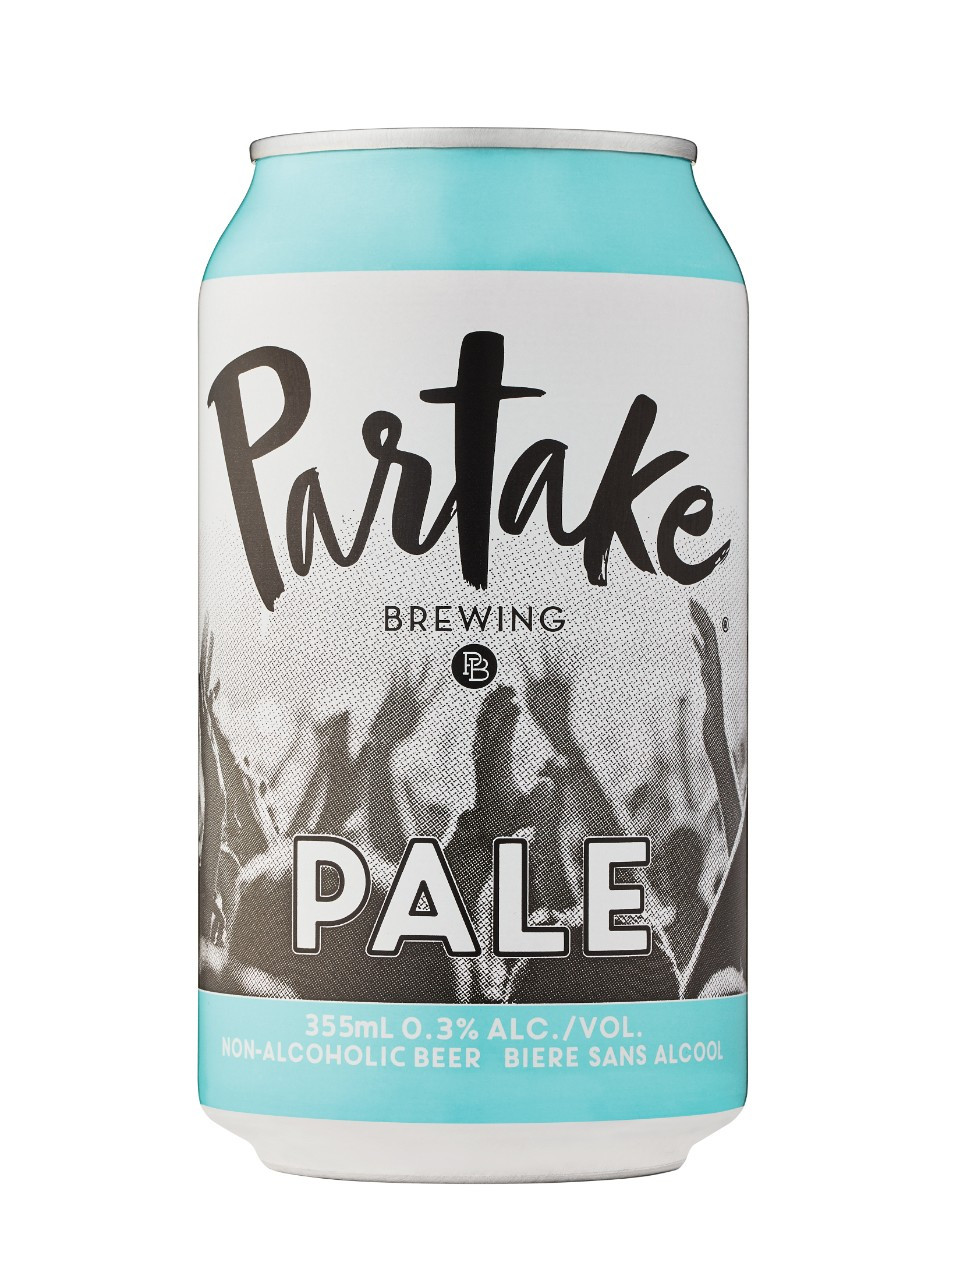 Partake brewing non-alcoholic pale ale  355 ml